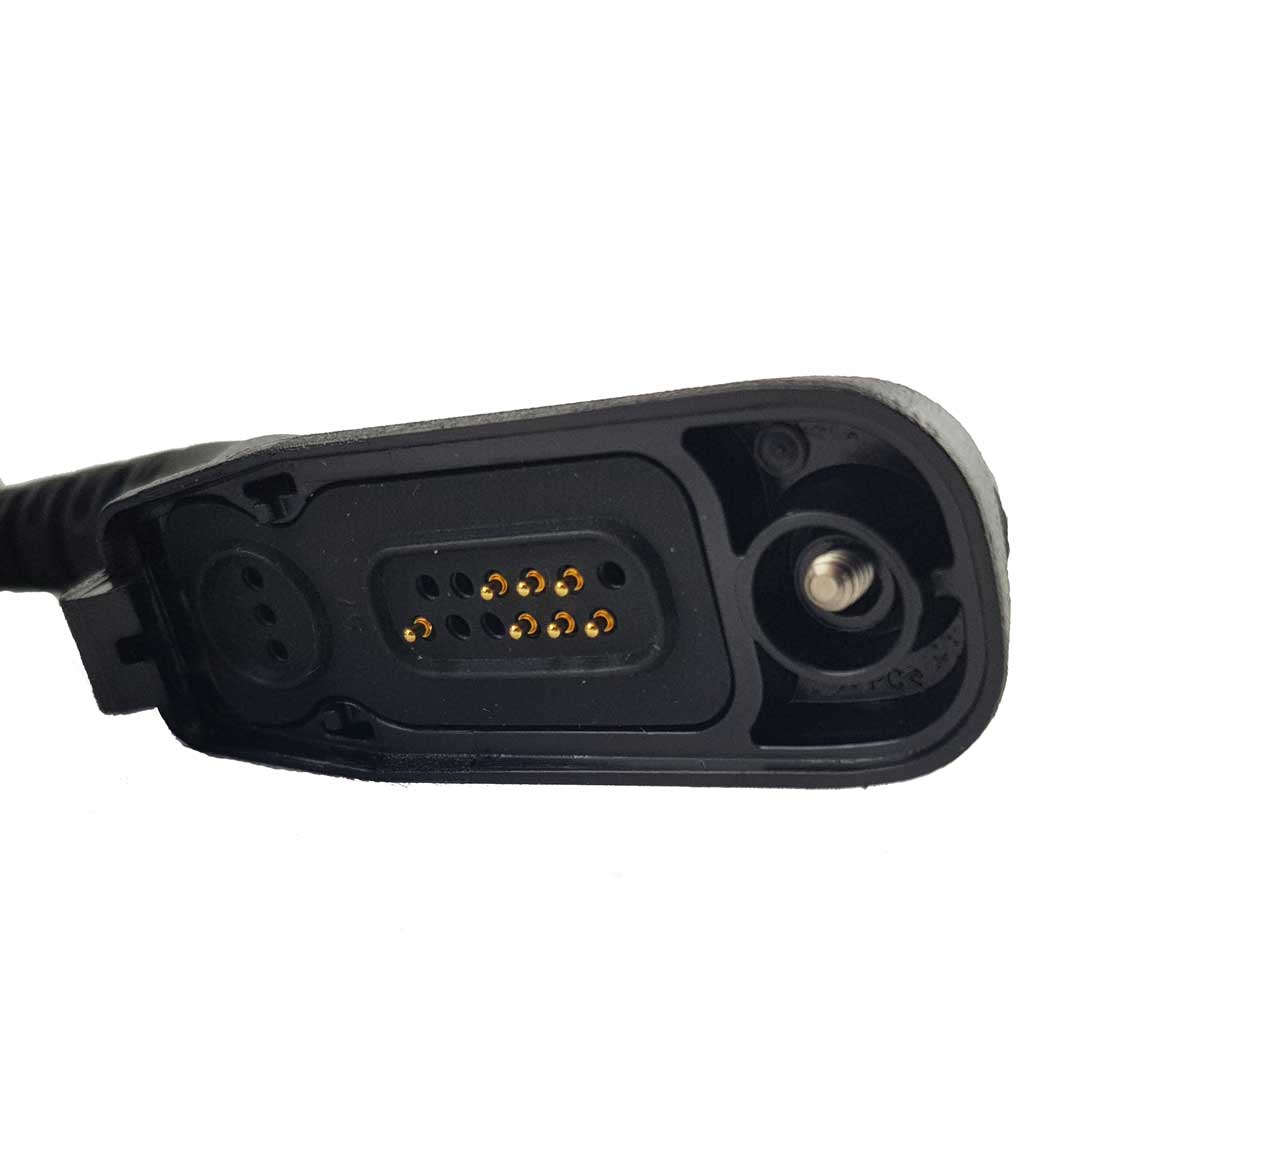 Motorola Abgesetztes Lautsprecher Mikrofon mit Klinkenbuchse PMMN4024A